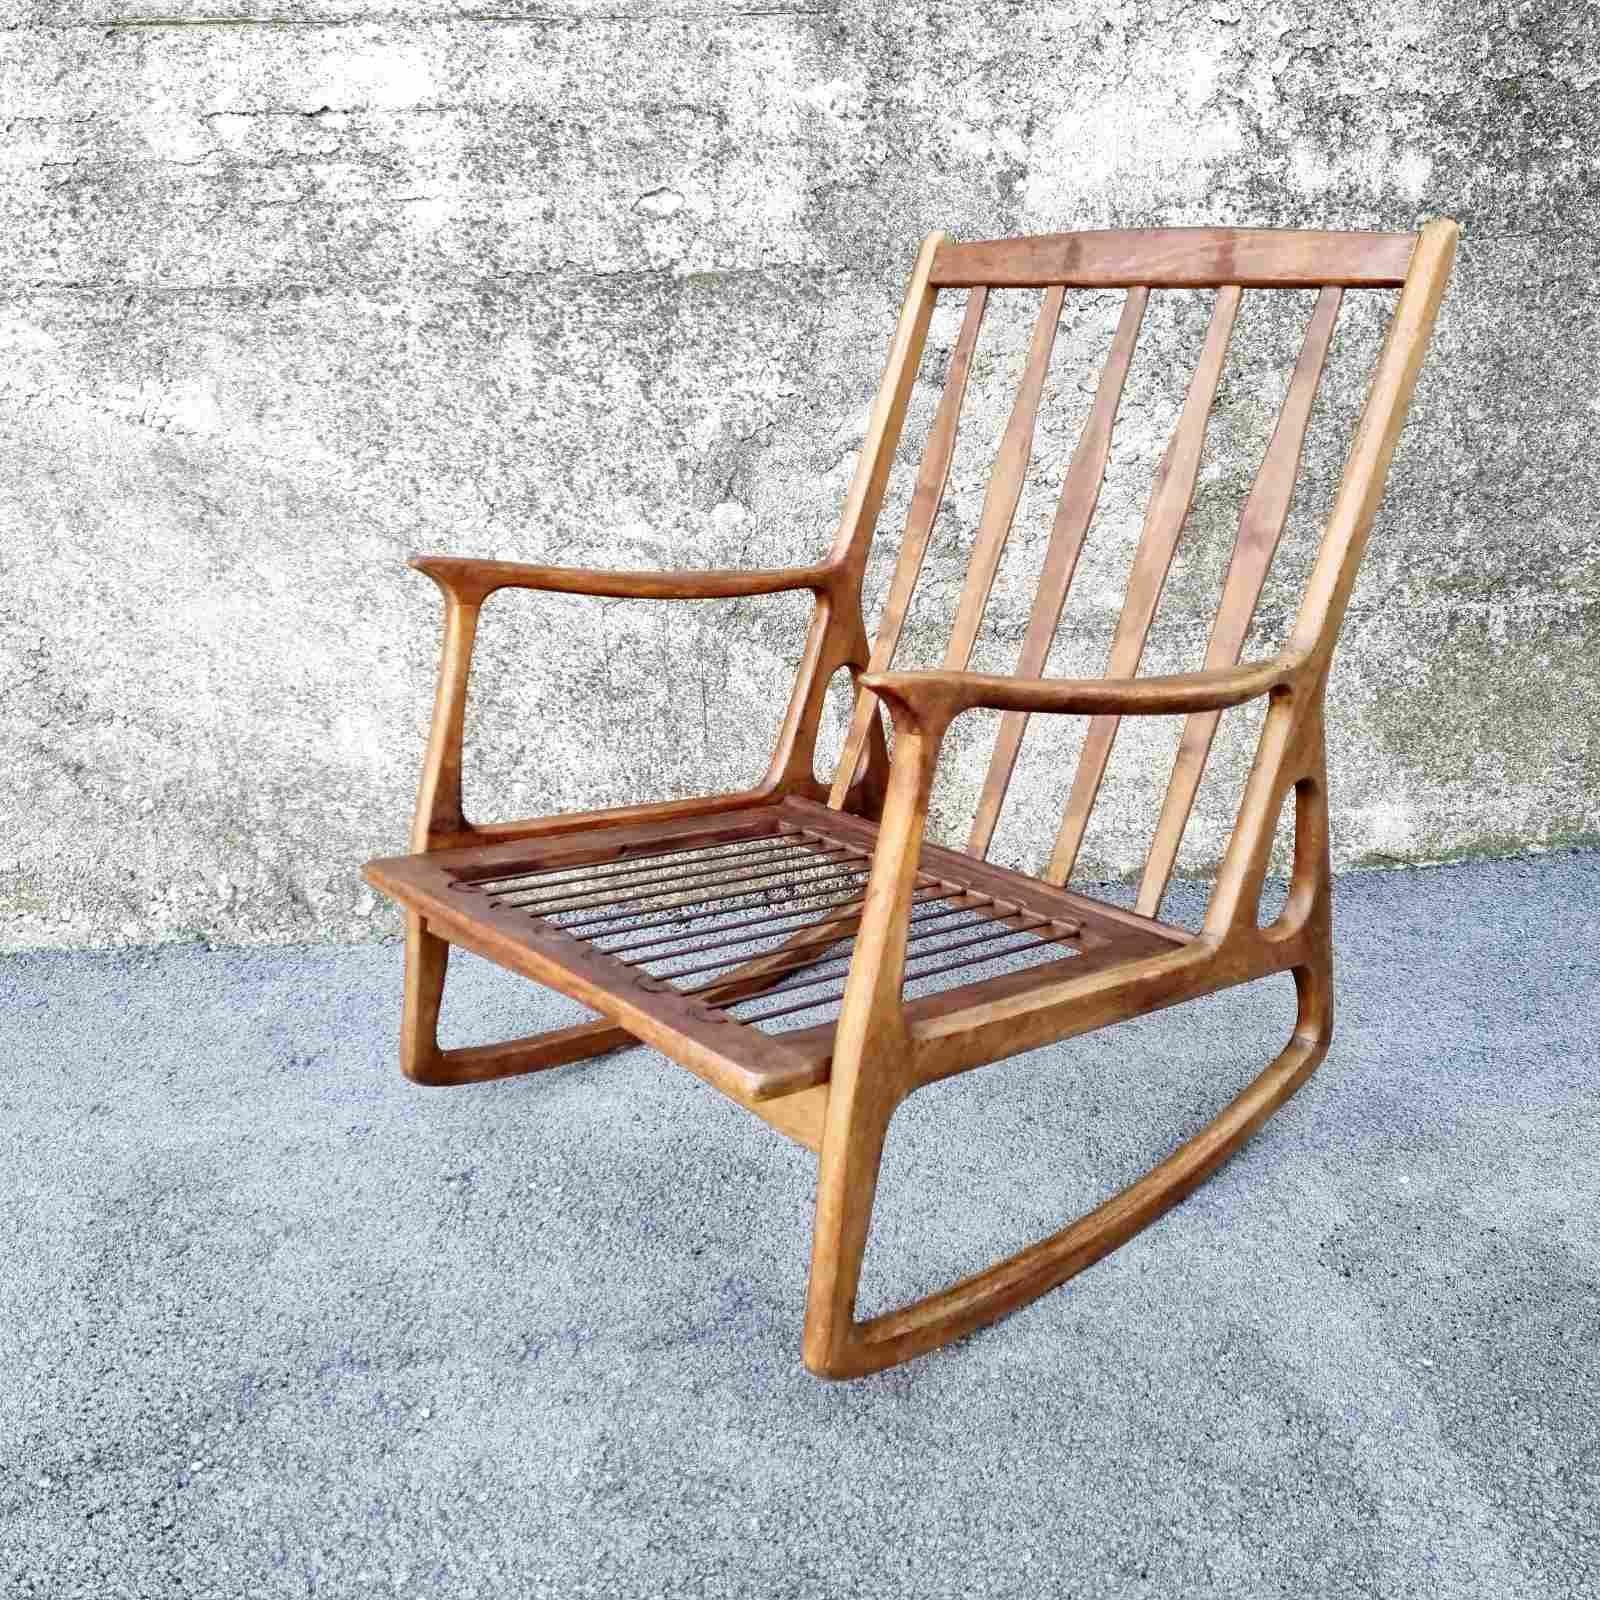 Very rare Italian rocking chair
Made from walnut
Classic italian design